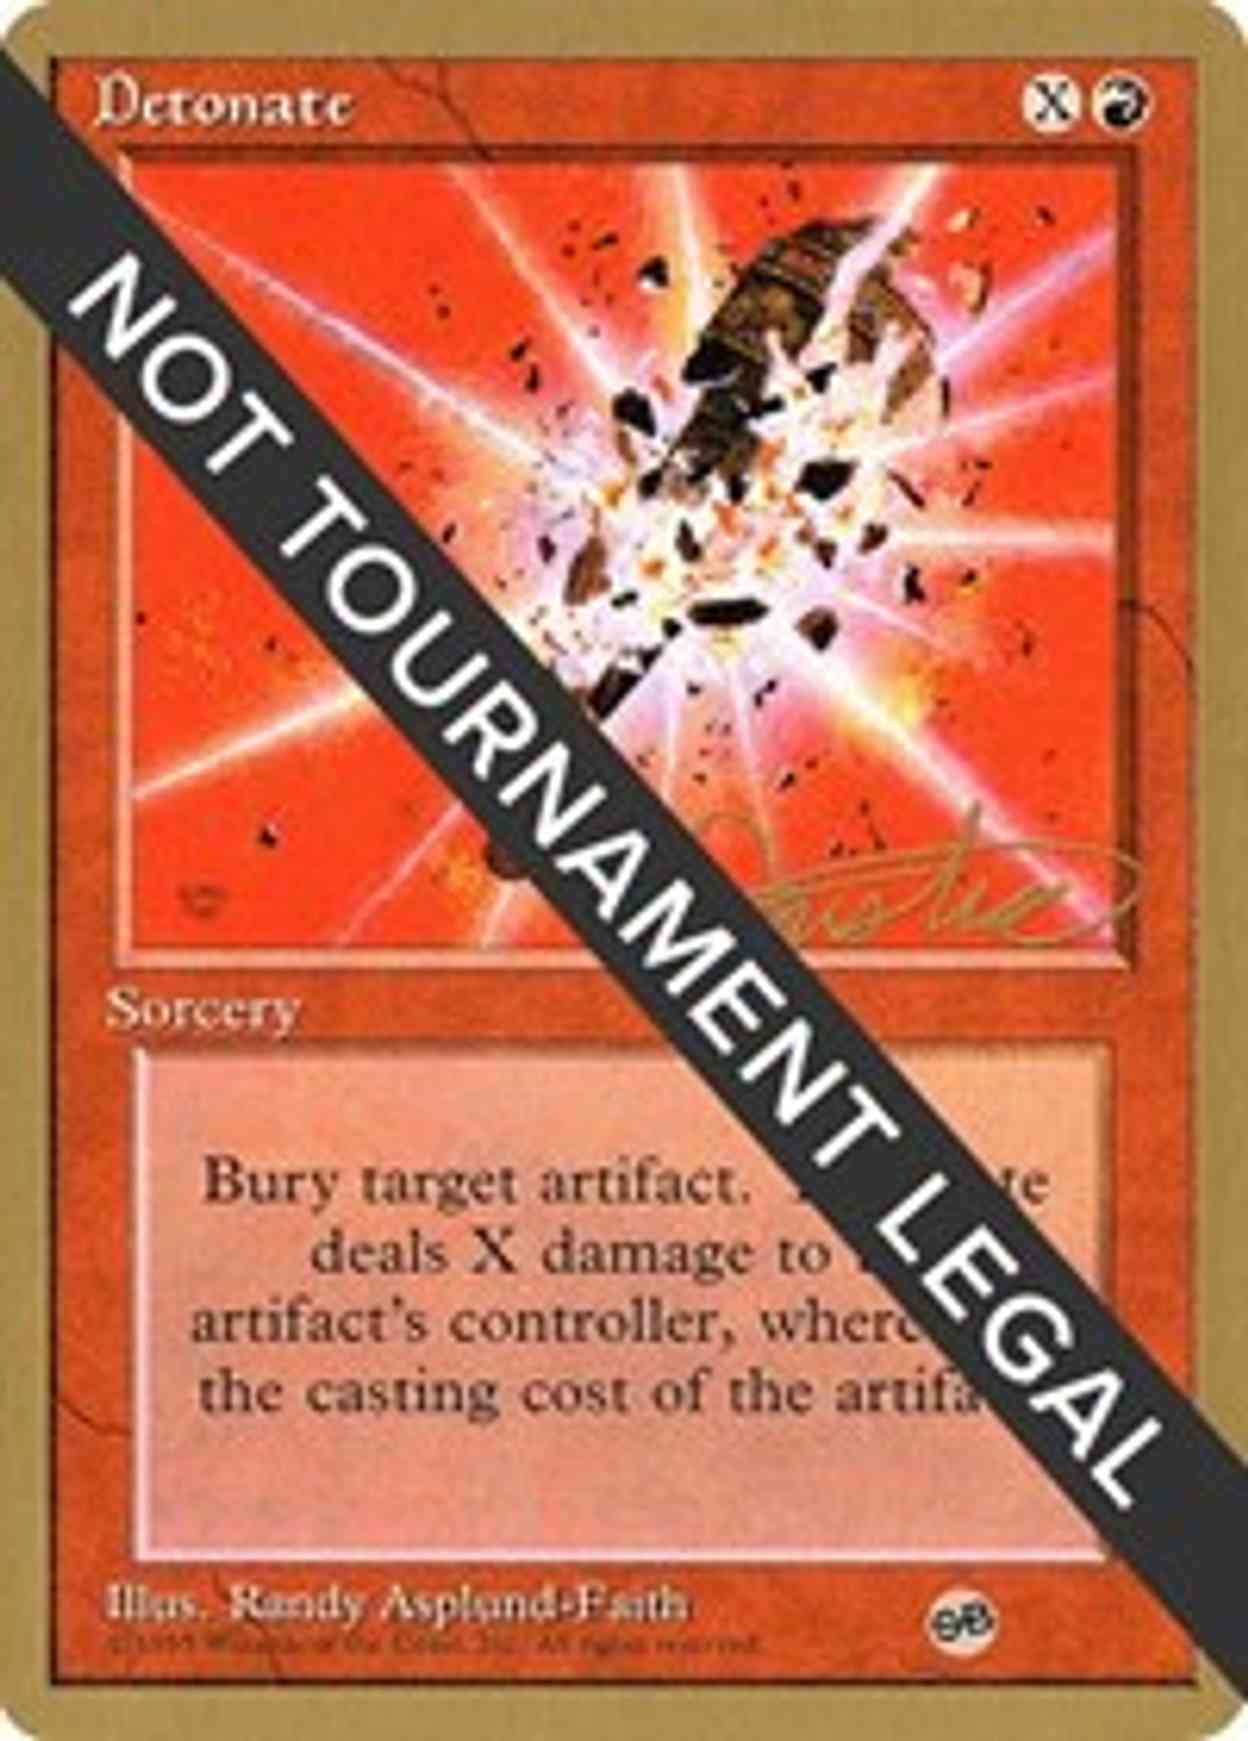 Detonate - 1996 Mark Justice (4ED) (SB) magic card front